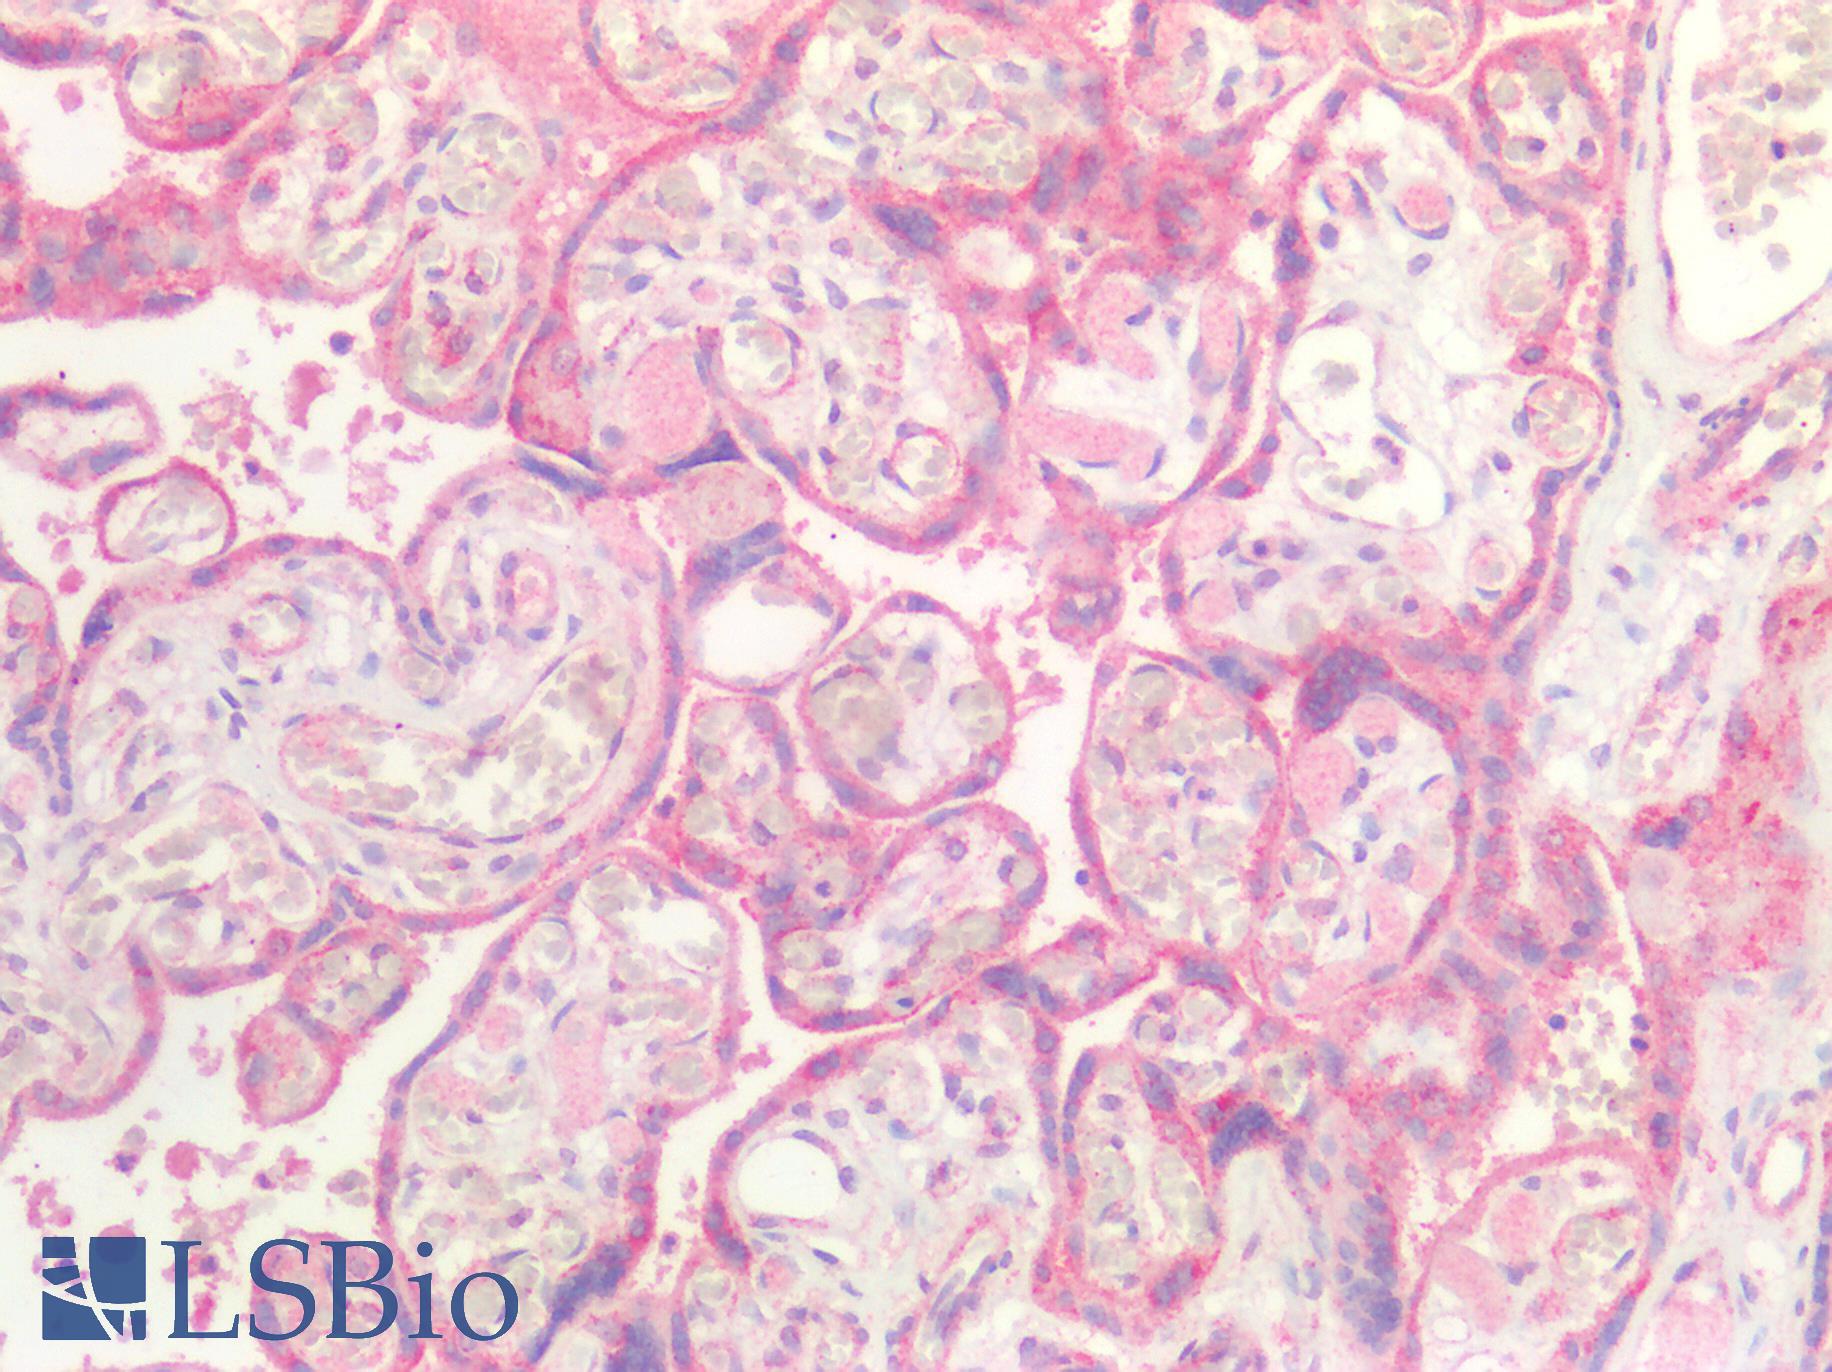 GDF15 Antibody - Human Placenta: Formalin-Fixed, Paraffin-Embedded (FFPE)